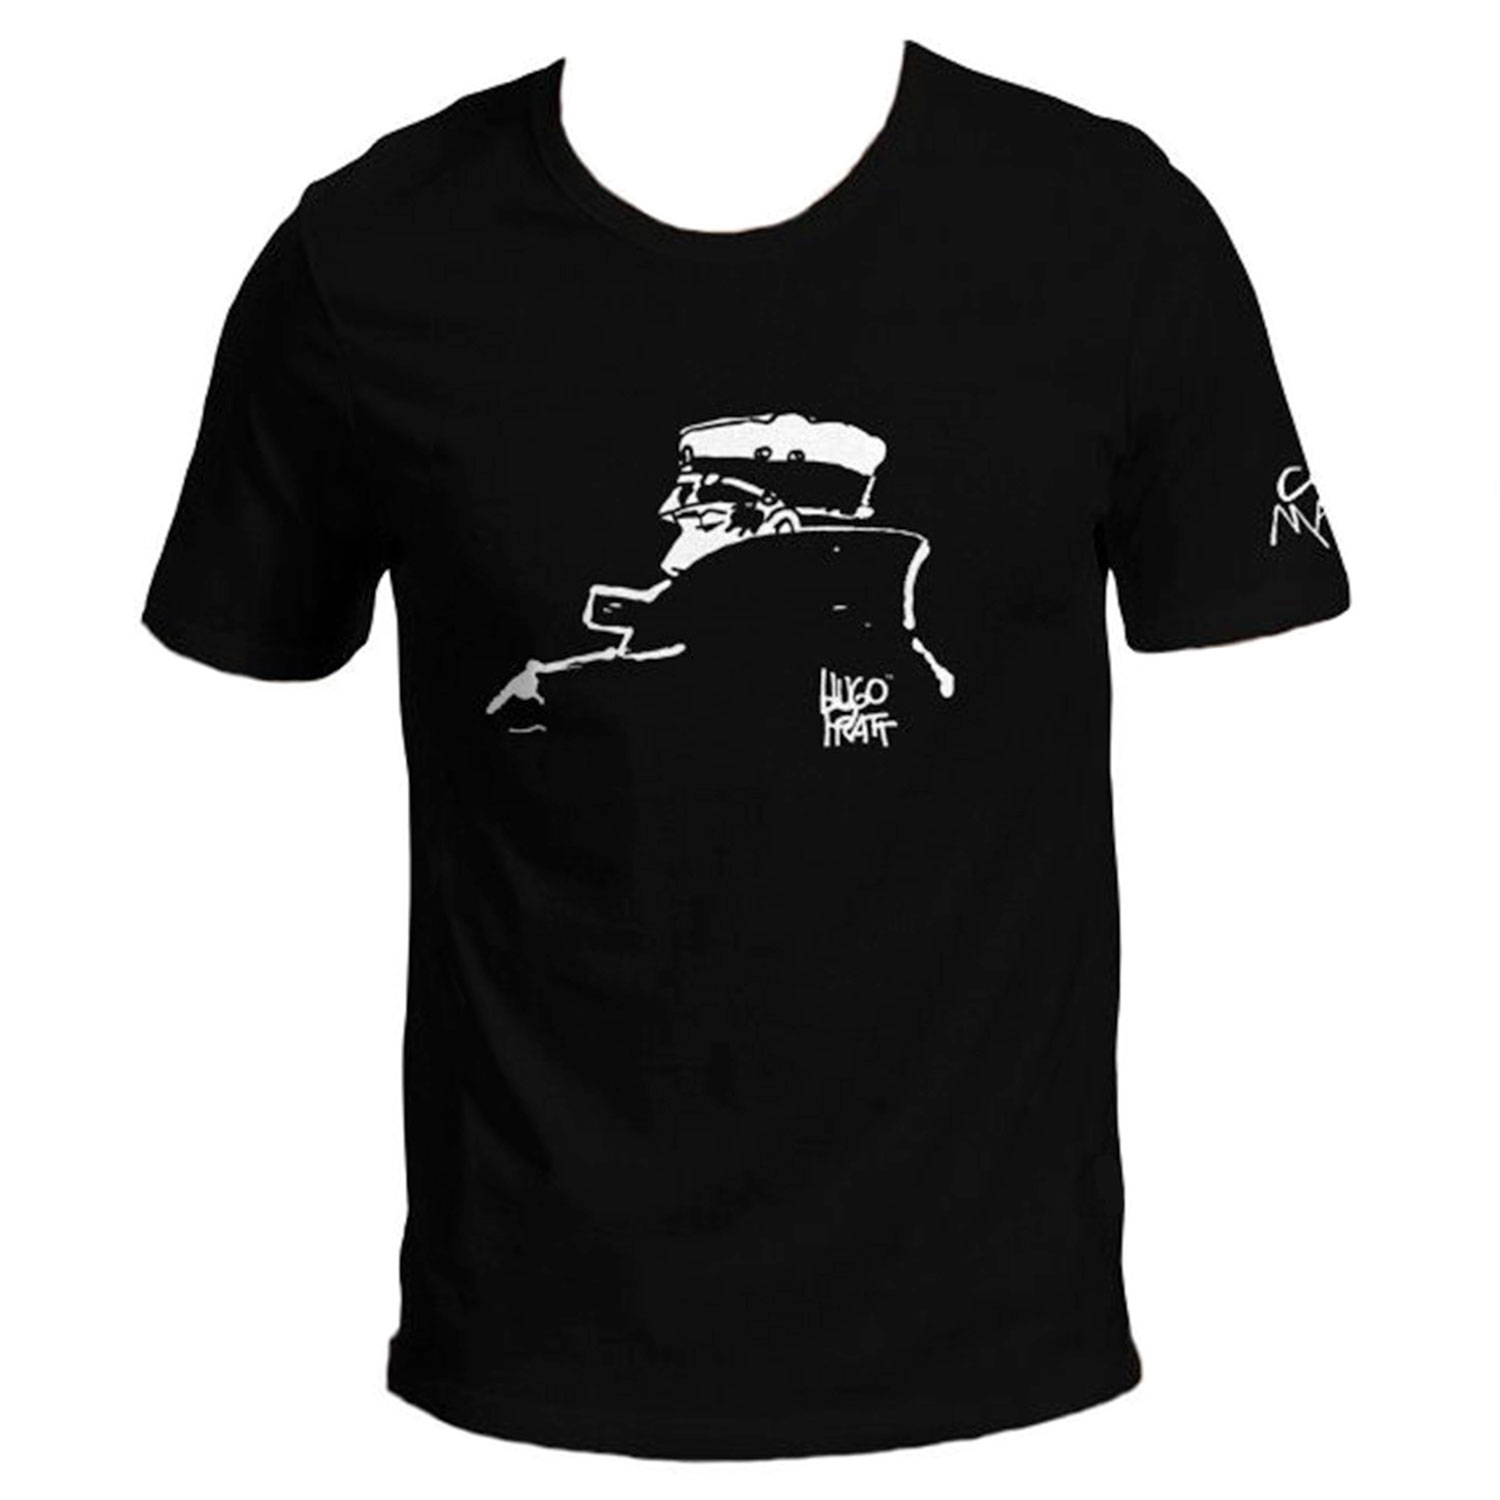 Hugo Pratt T-shirt : Corto Maltese , Nocturnal (black)